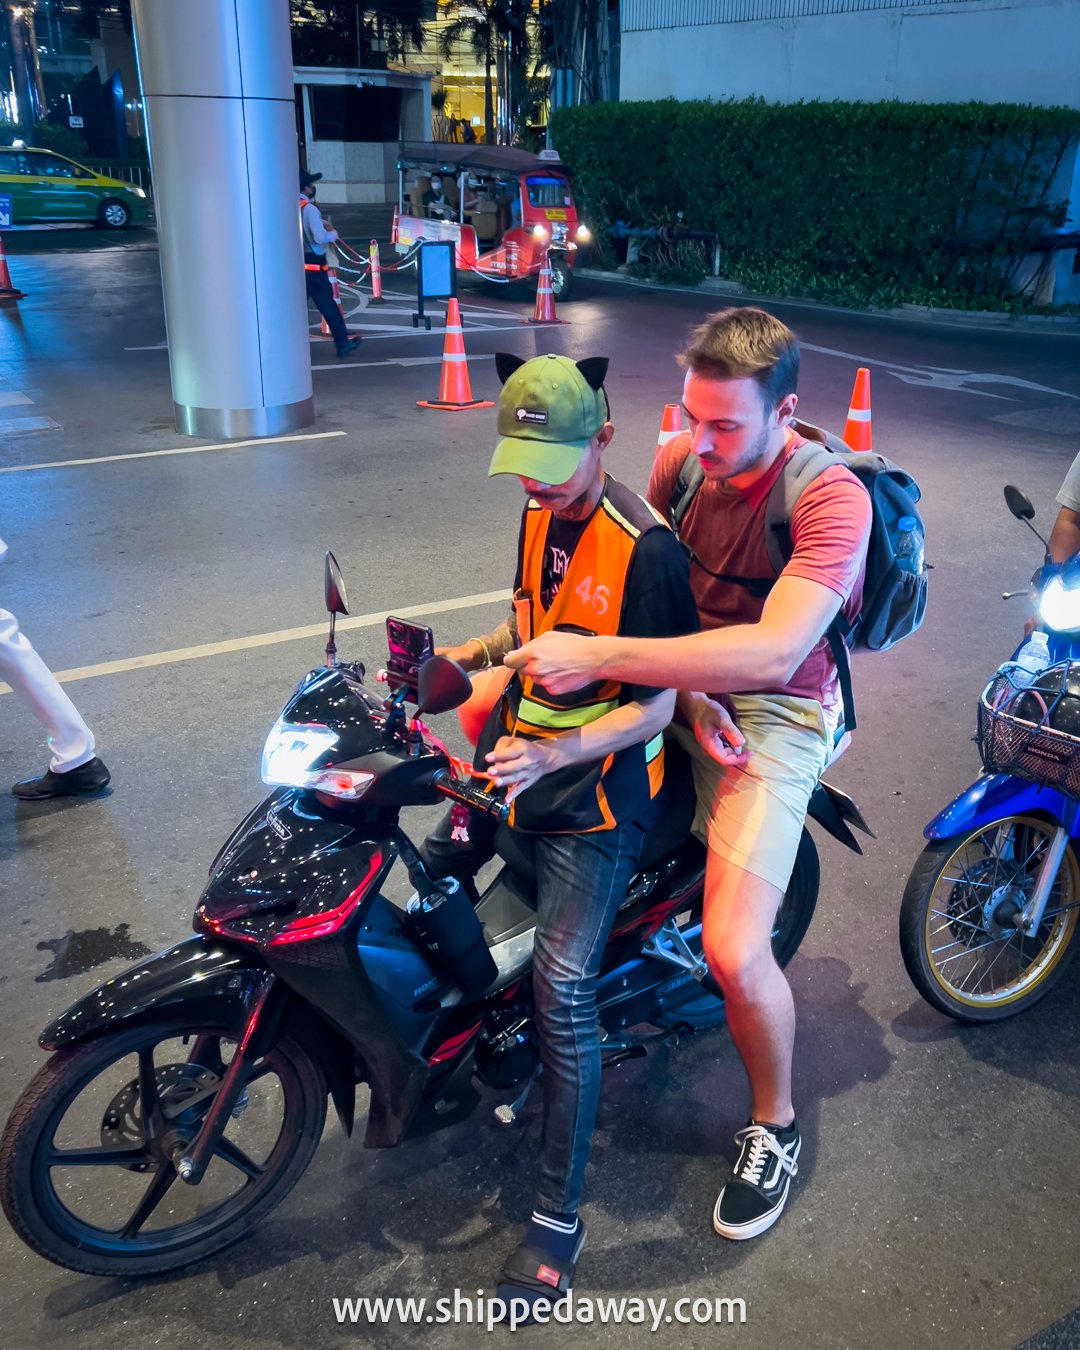 Grab bike transportation in Bangkok, Thailand